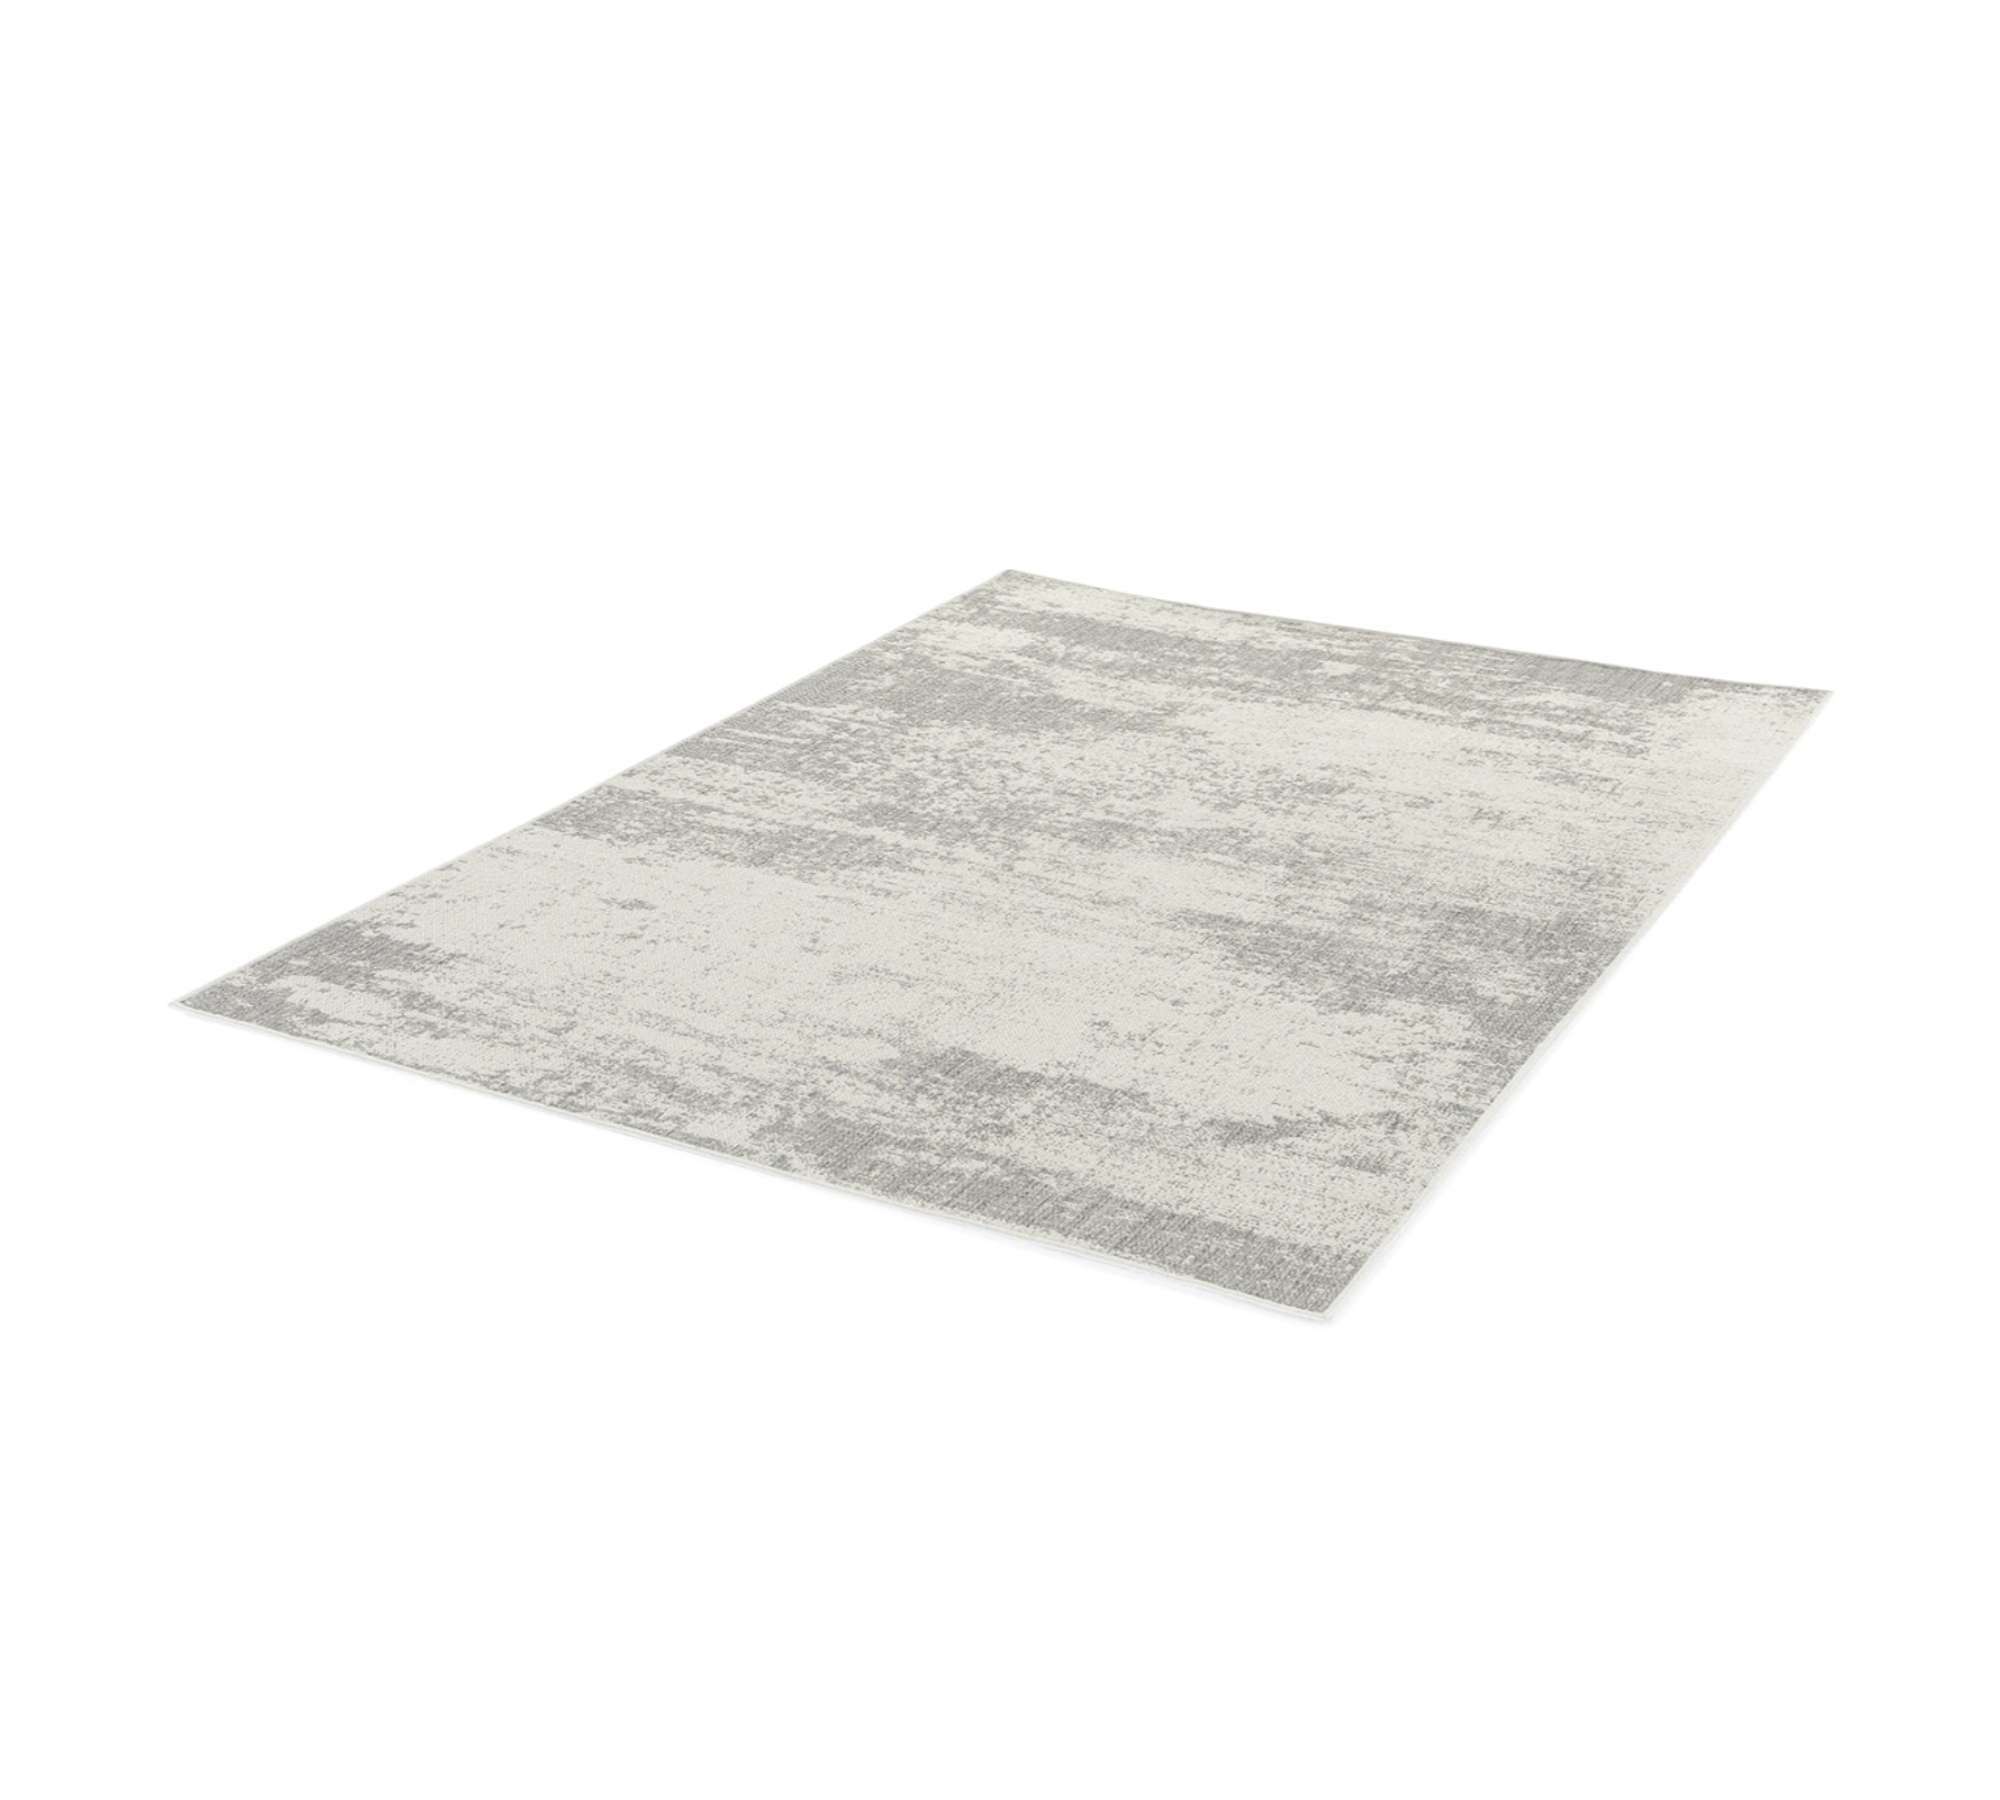 Outdoorteppich Textil Silber Grau 1